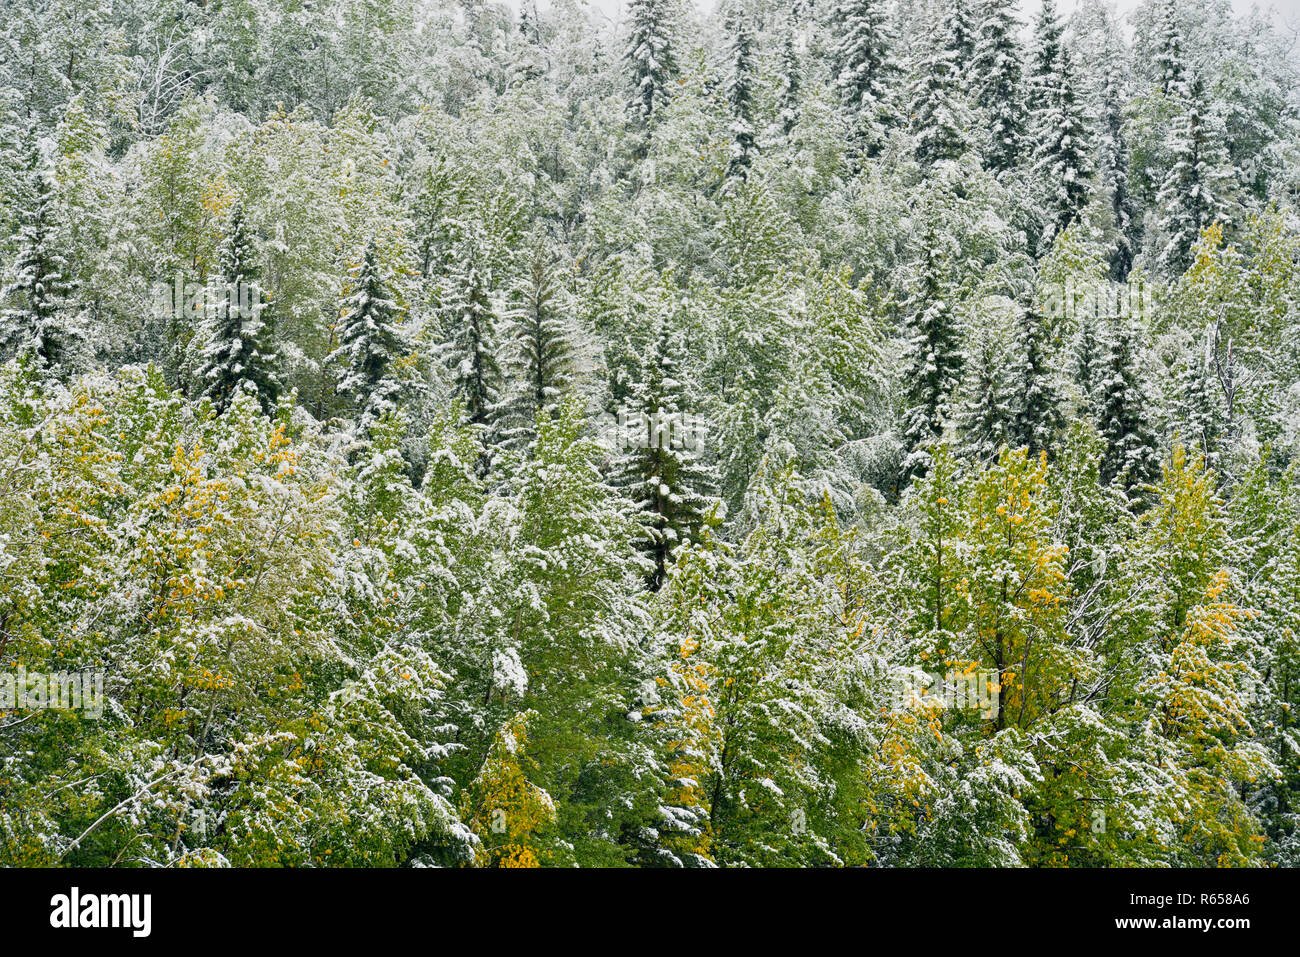 Nadelbaum und Espe Bäume mit nassen Schnee Anfang September, Highway 29 nach Hudsons Hope BC, Britisch-Kolumbien, Kanada Stockfoto